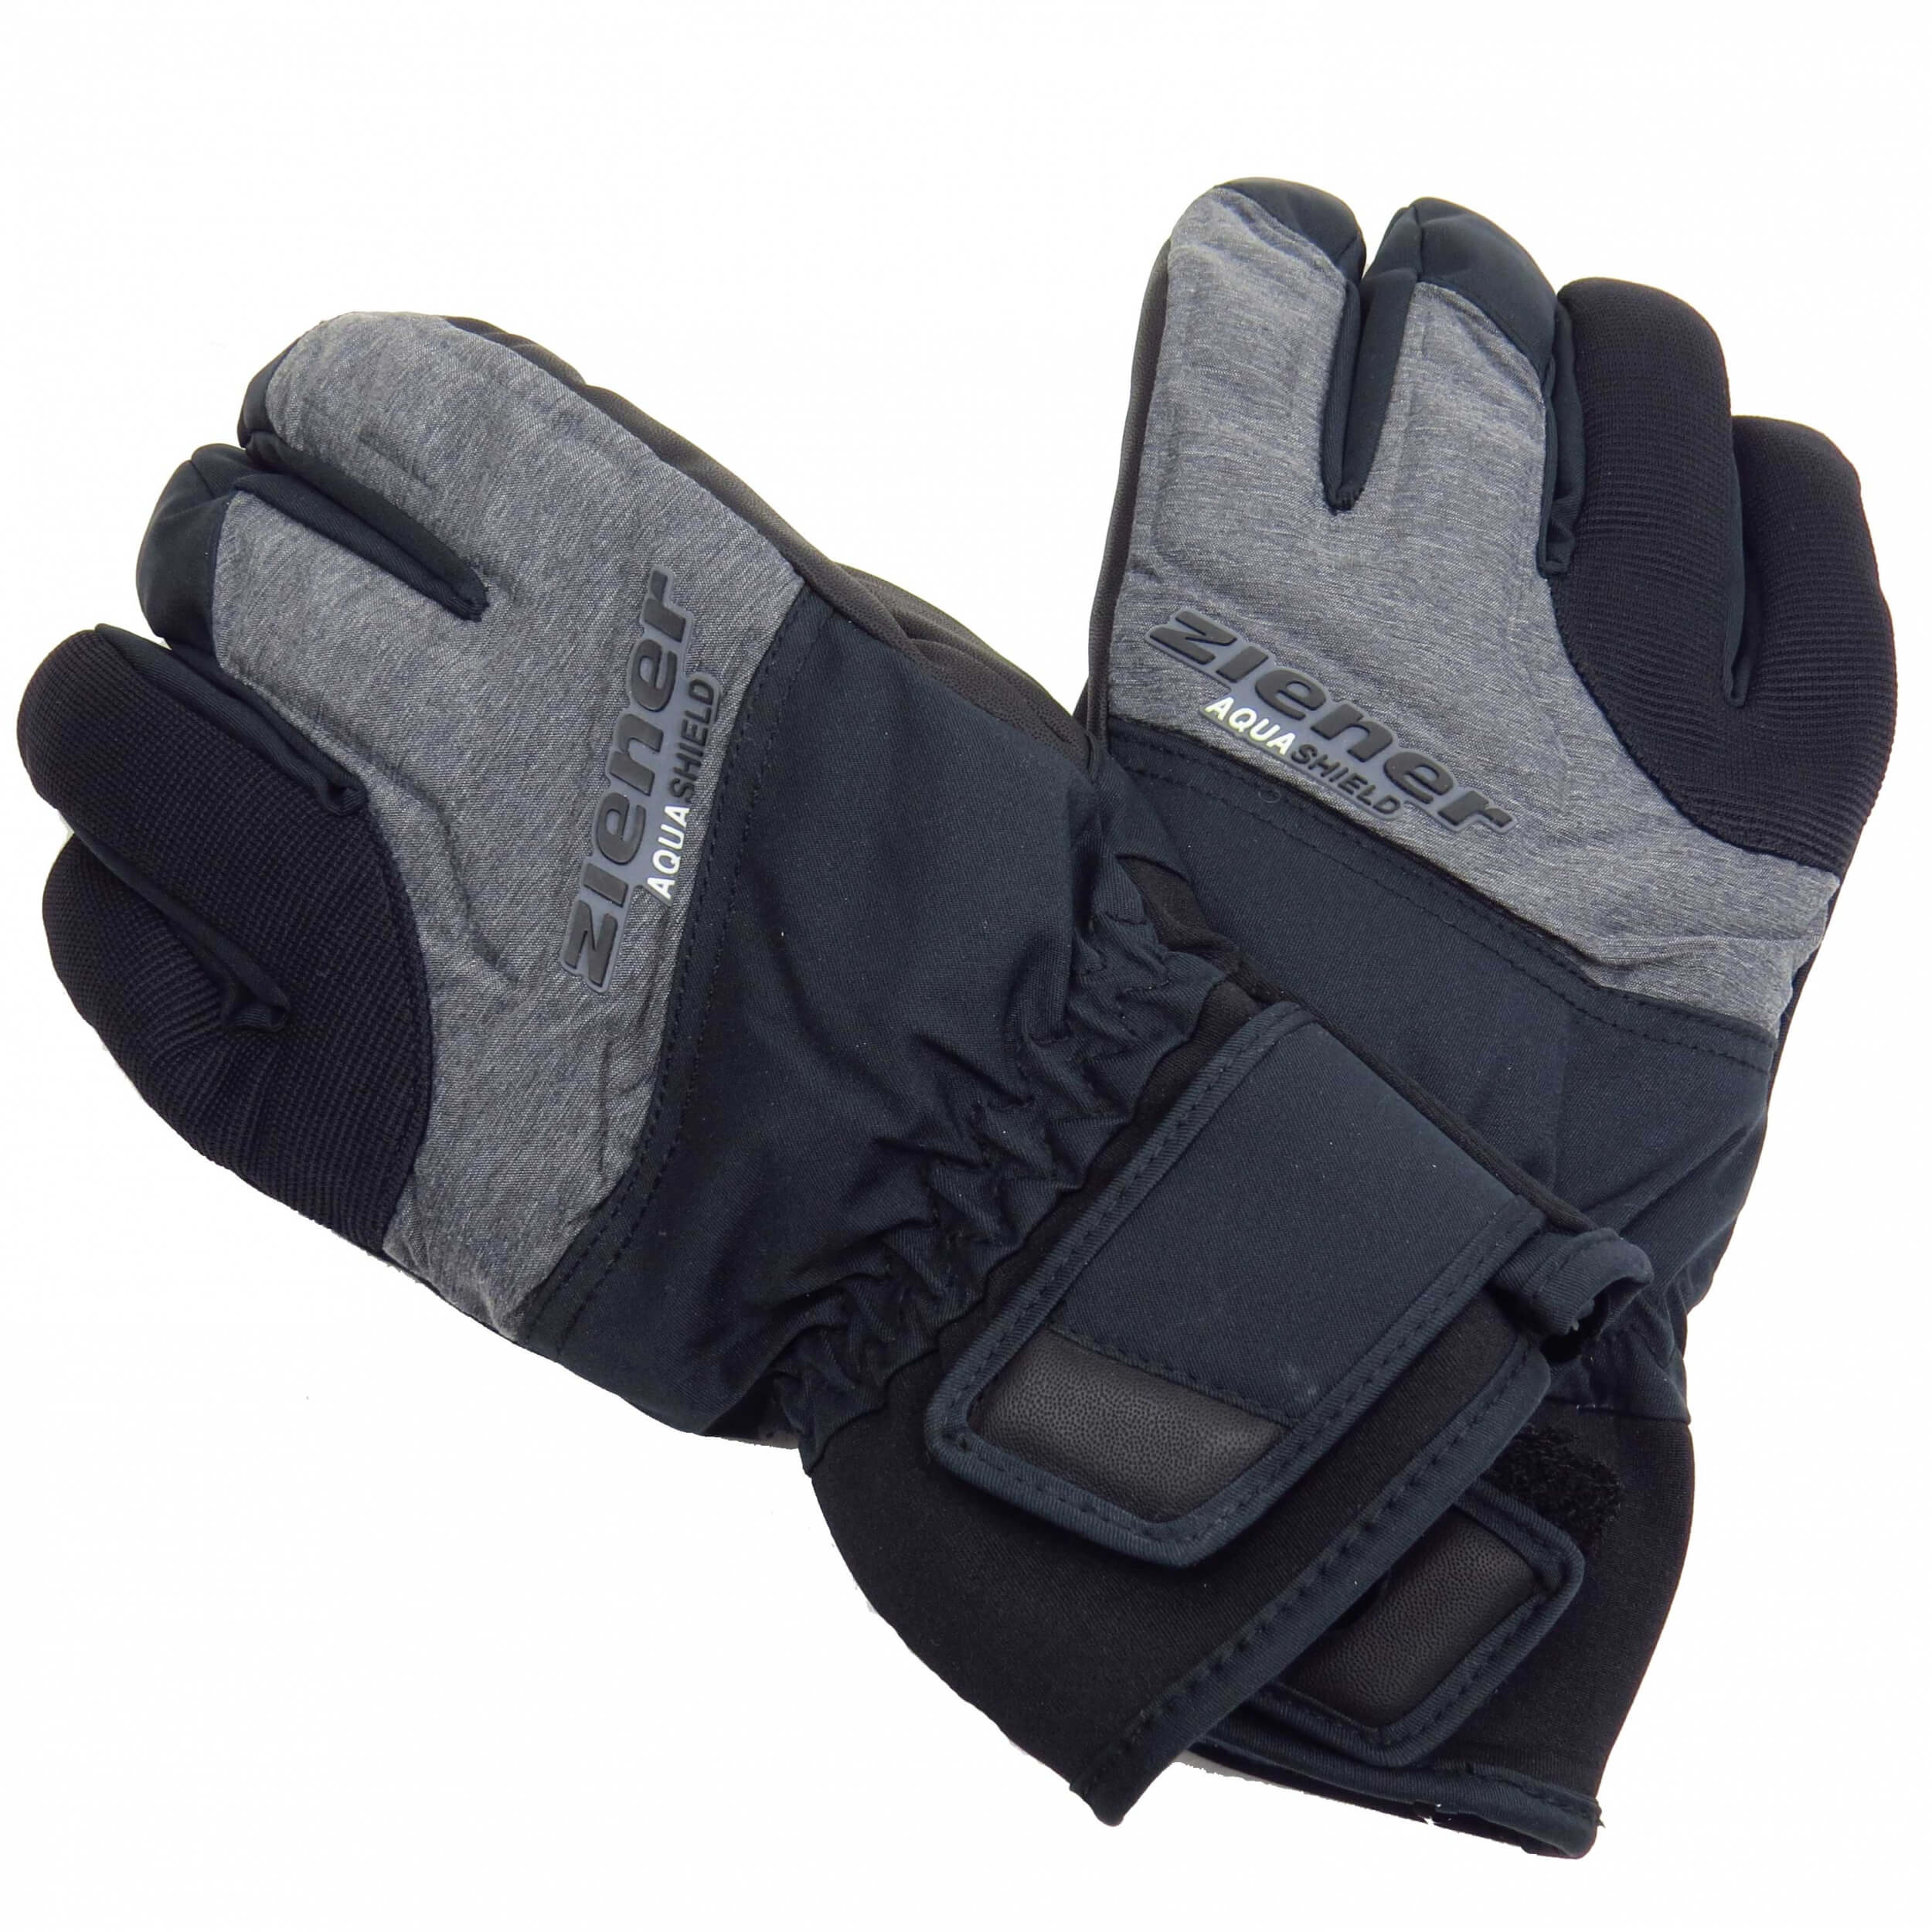 ZIENER Ski Handschuhe Gelmo 822 grau